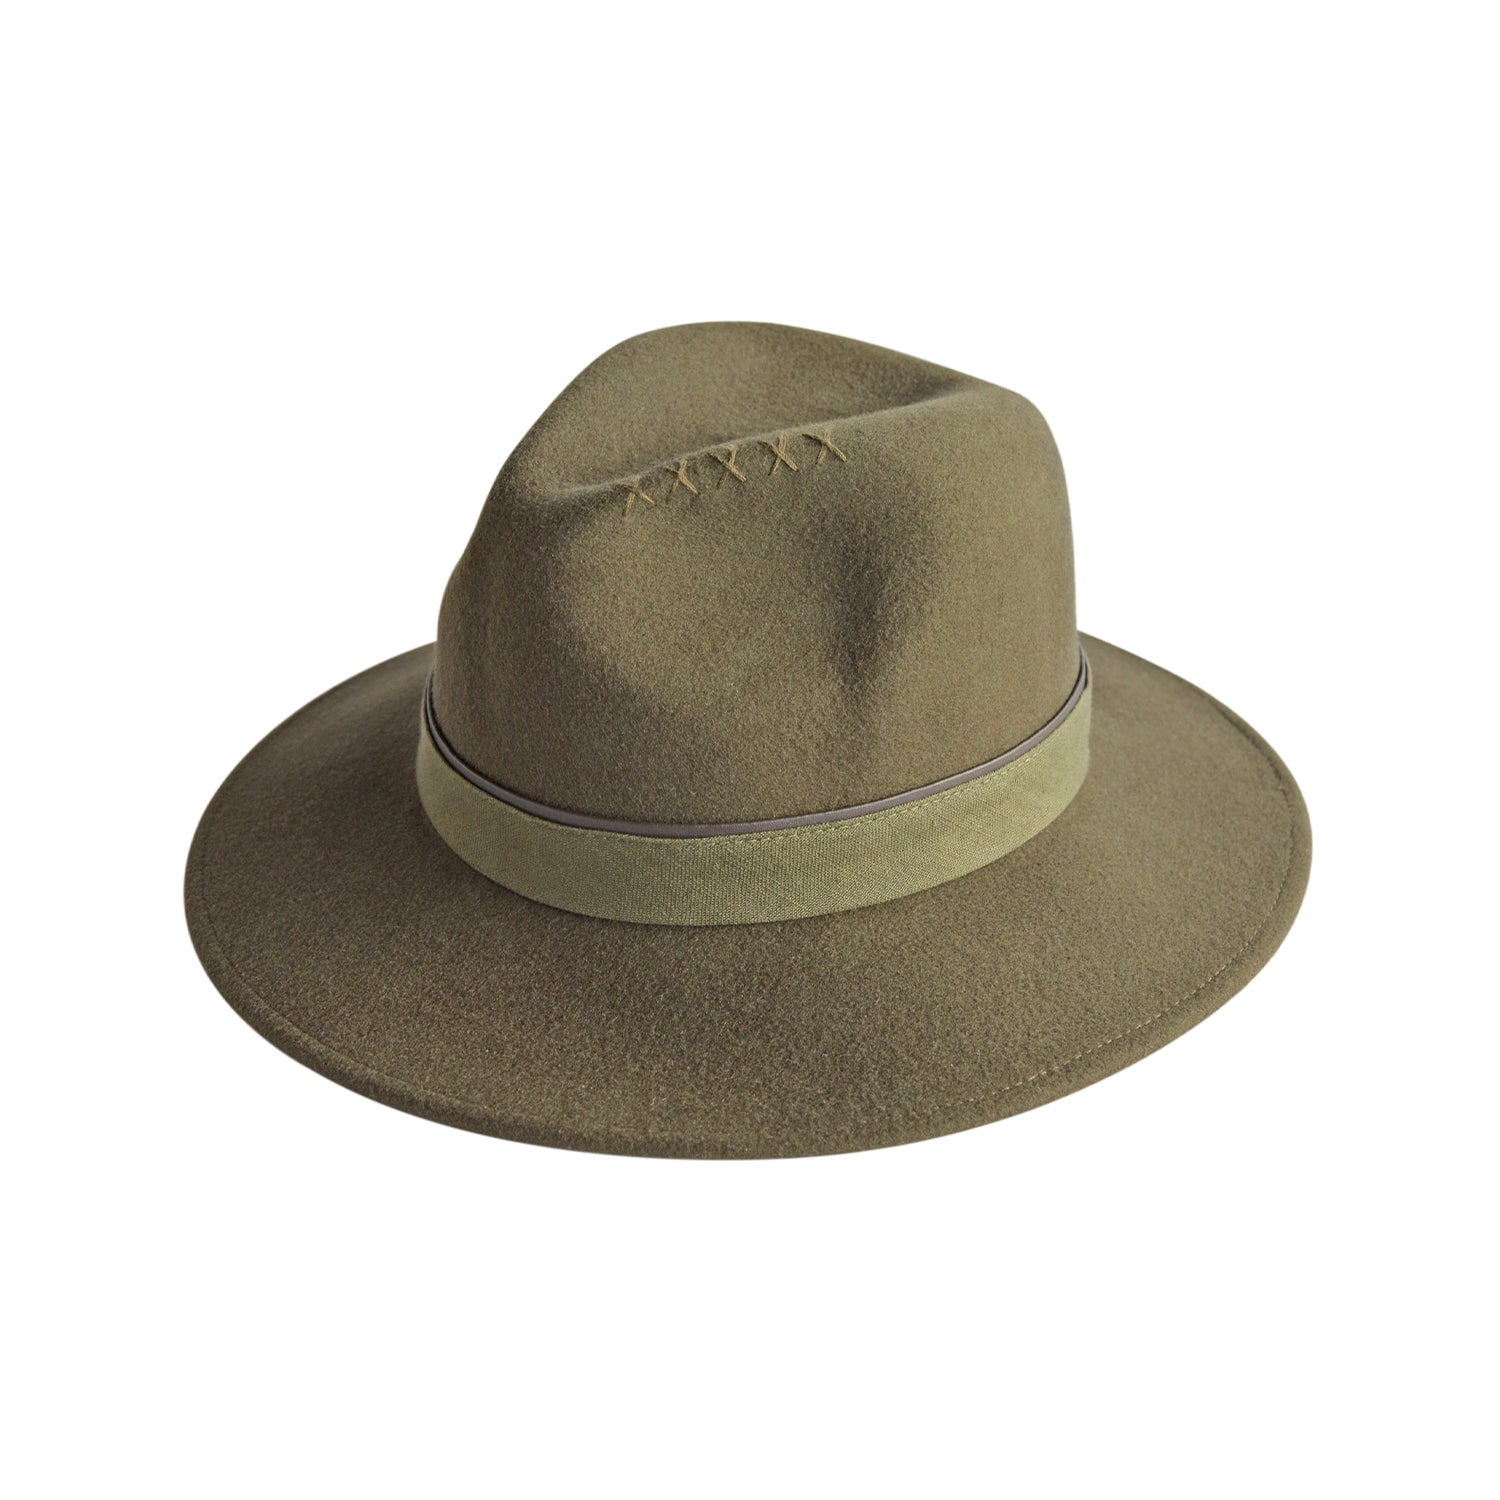 Buy Online - Fedora Hat Band Olive Green - Fancy Fedora